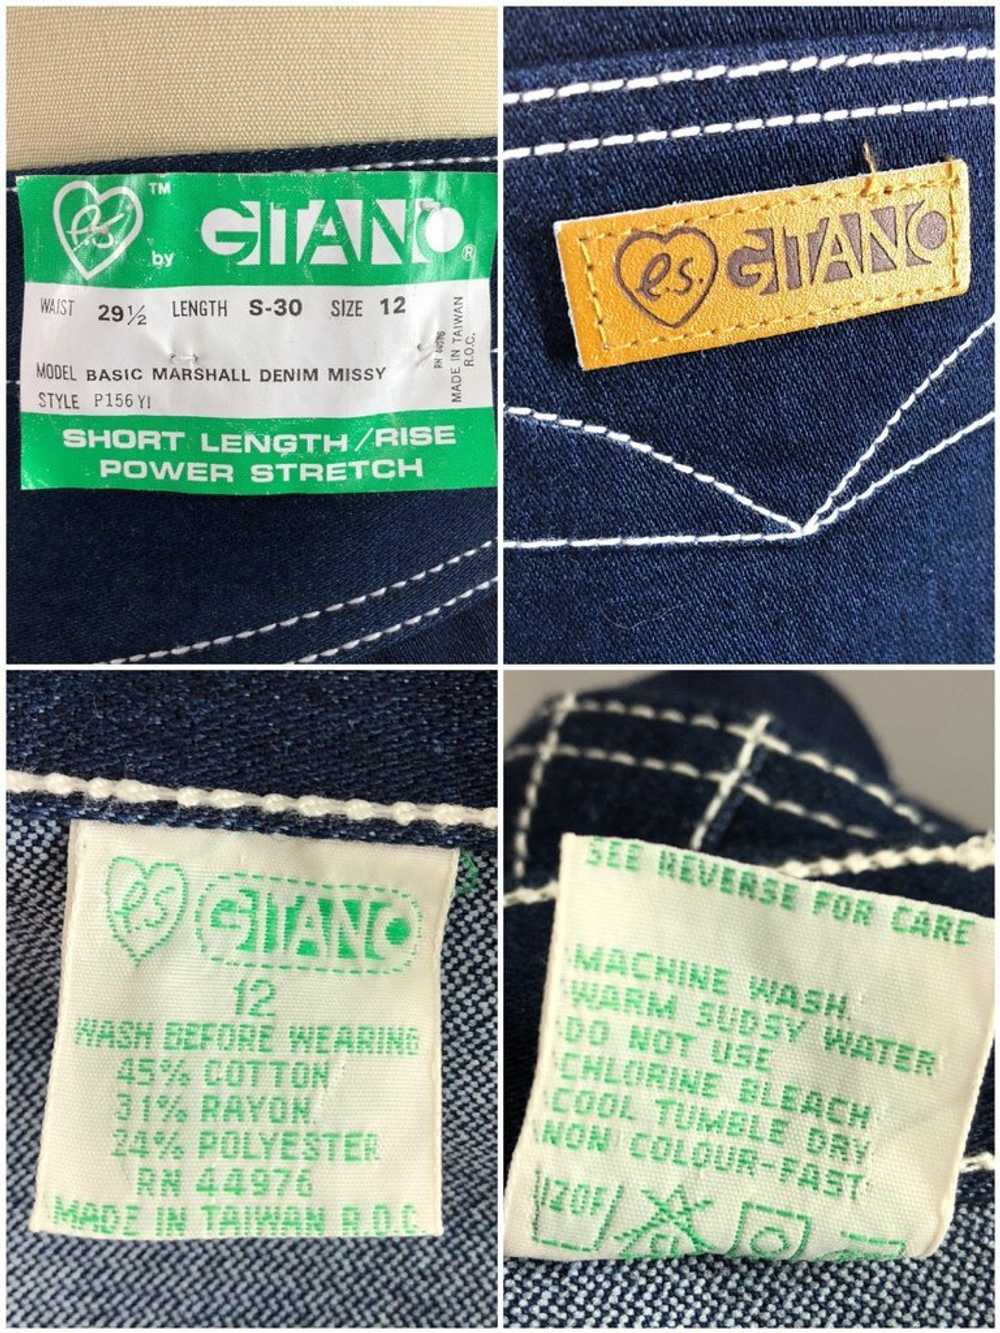 Vintage 1980s Gitano Jeans with Original Tags - image 7